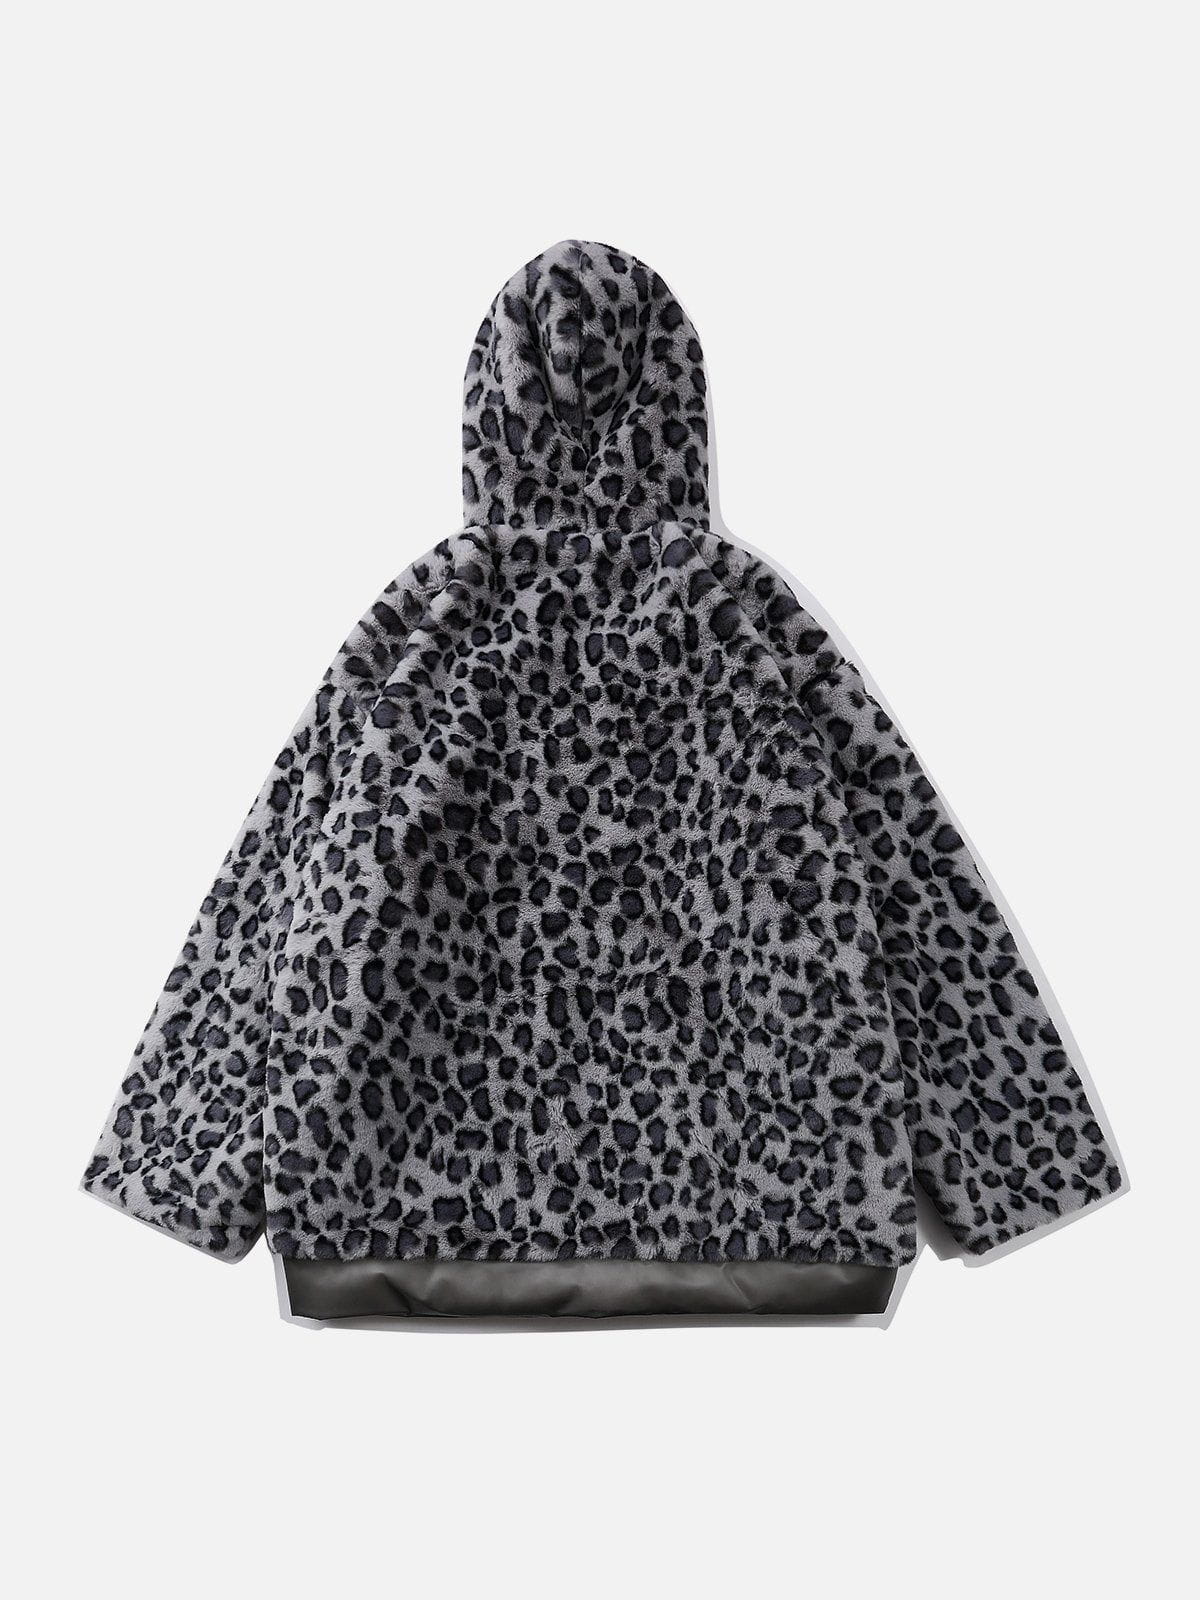 LUXENFY™ - Leopard Plush Stitching Transparent PU Winter Coat luxenfy.com